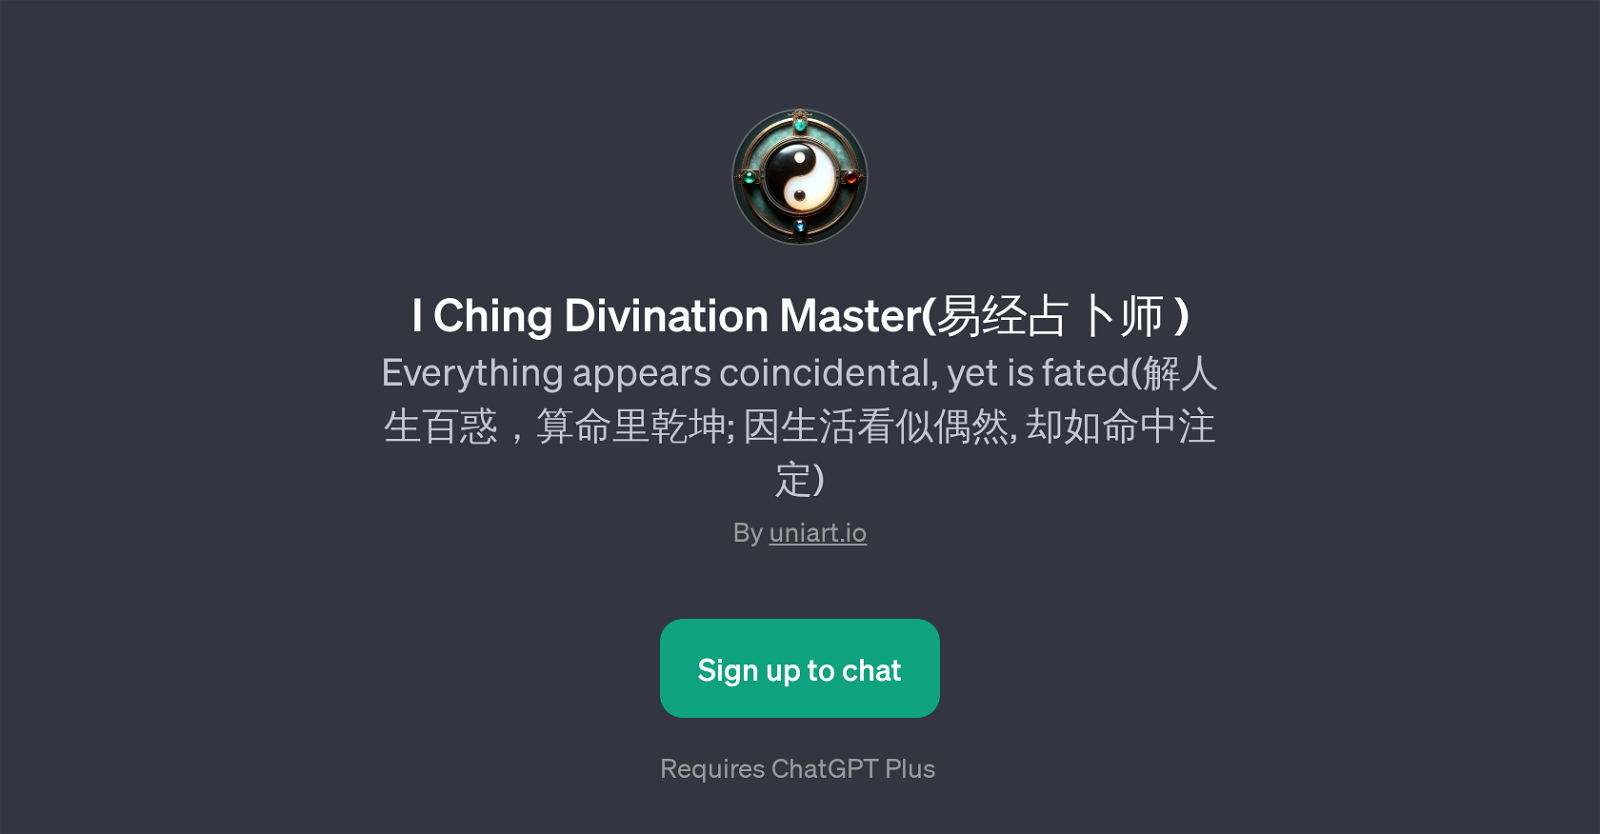 I Ching Divination Master website